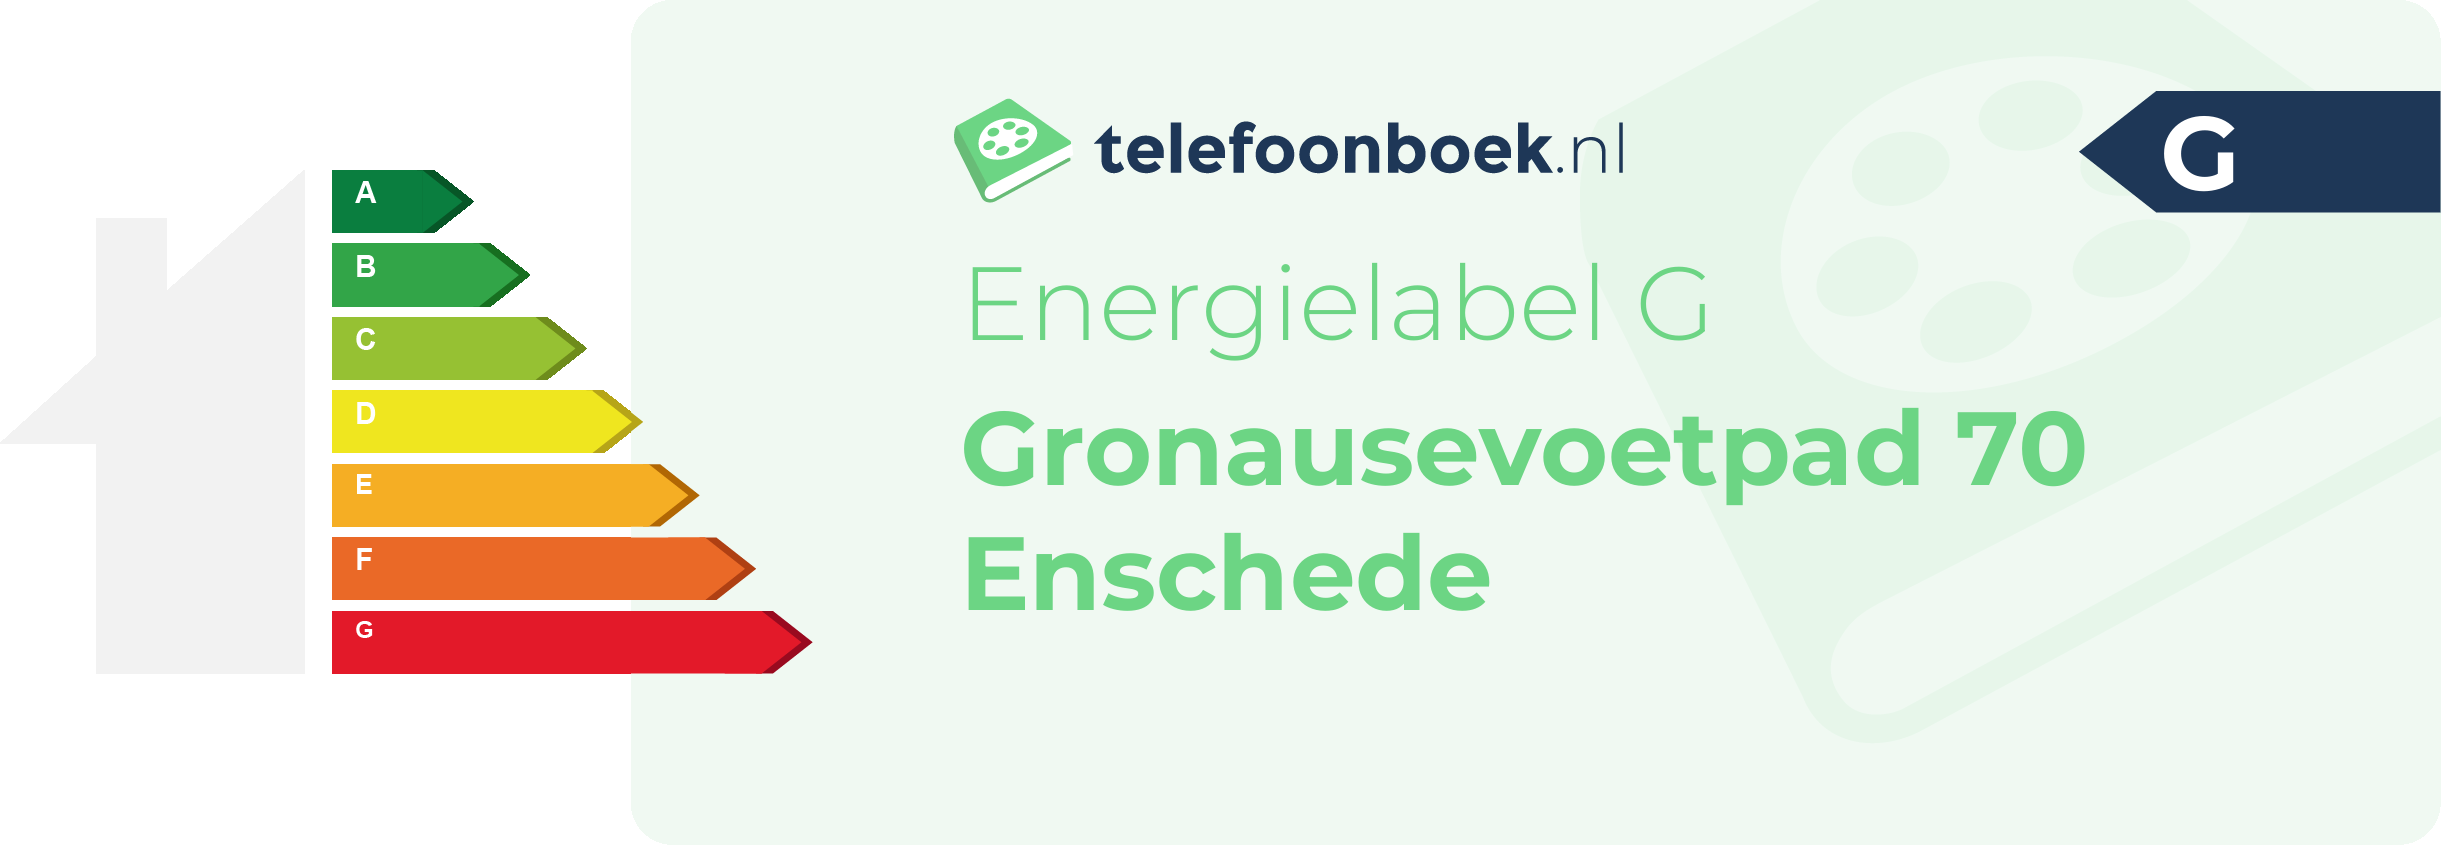 Energielabel Gronausevoetpad 70 Enschede